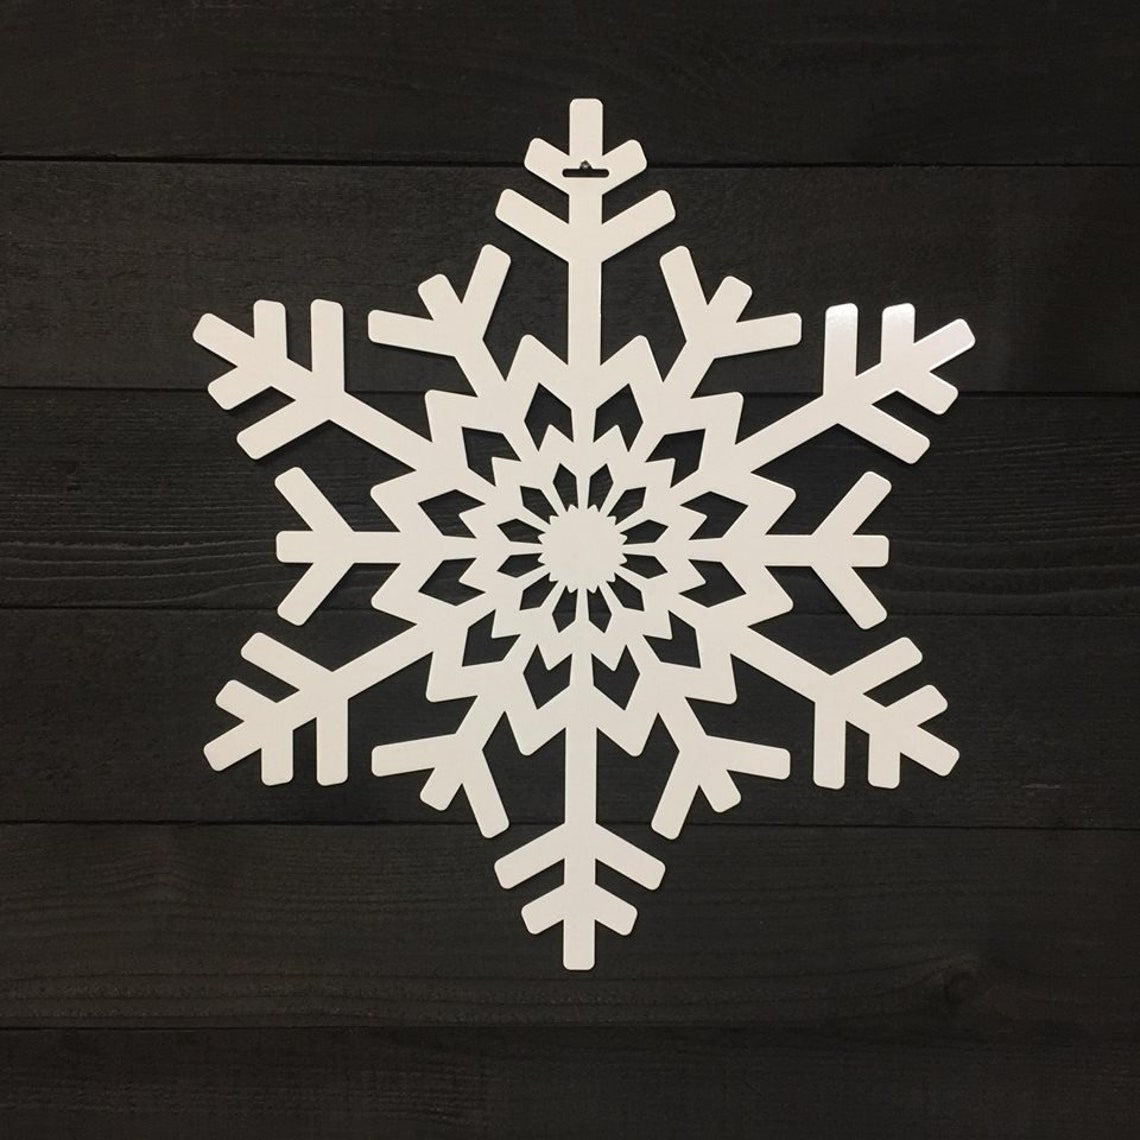 Snowflake Door Wreath / Wall Decor Metal Sign Family Sign House Sensations Art   